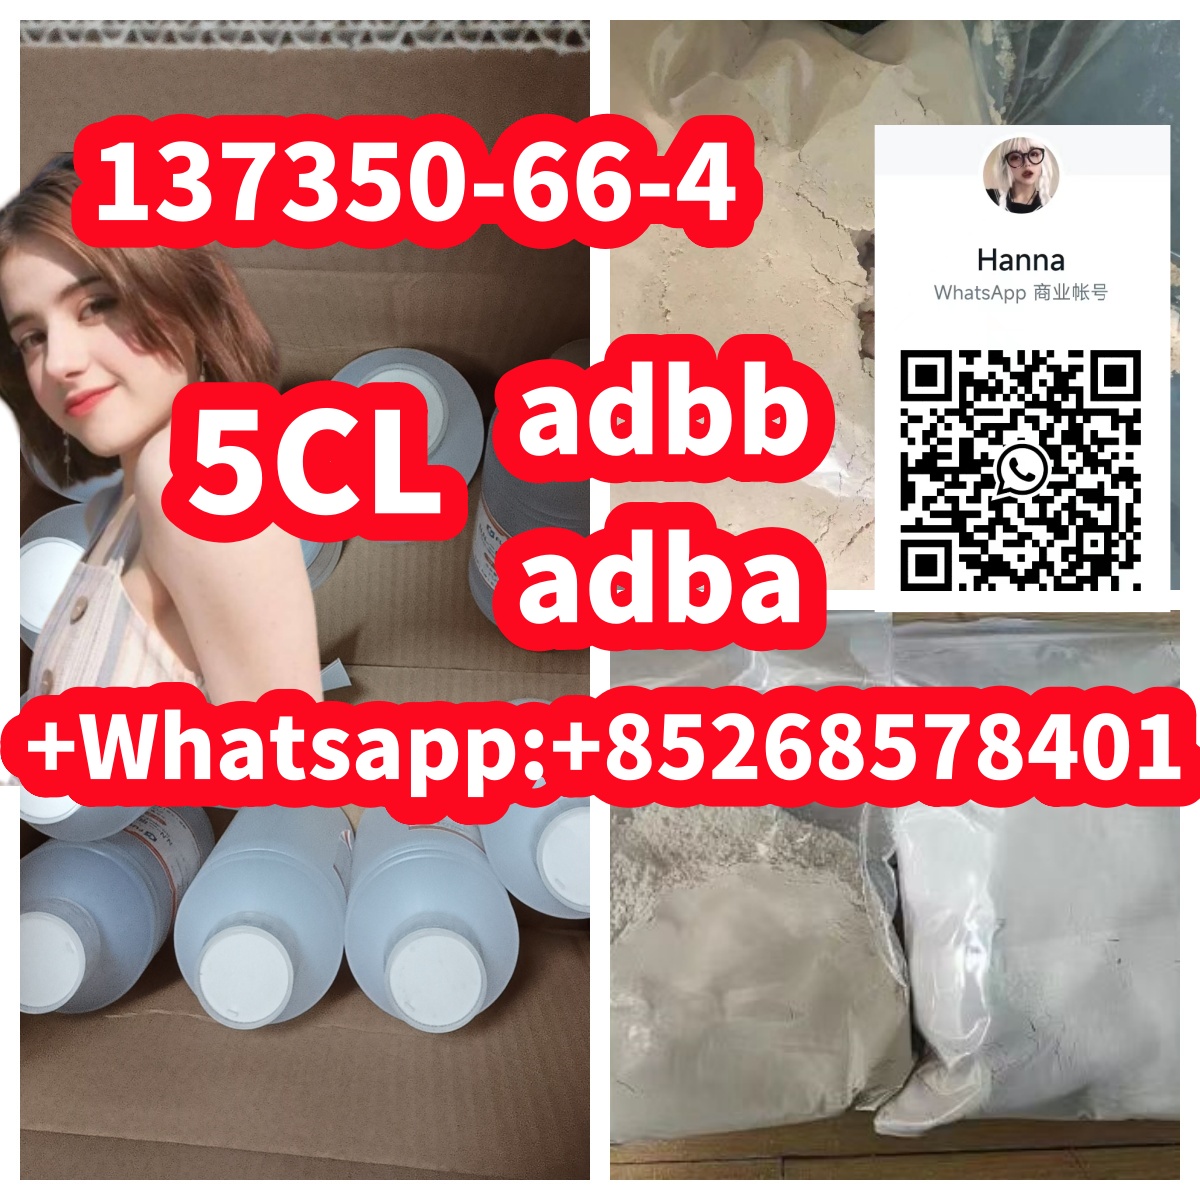 quality assurance 5CL adbb adba137350-66-4 รูปที่ 1